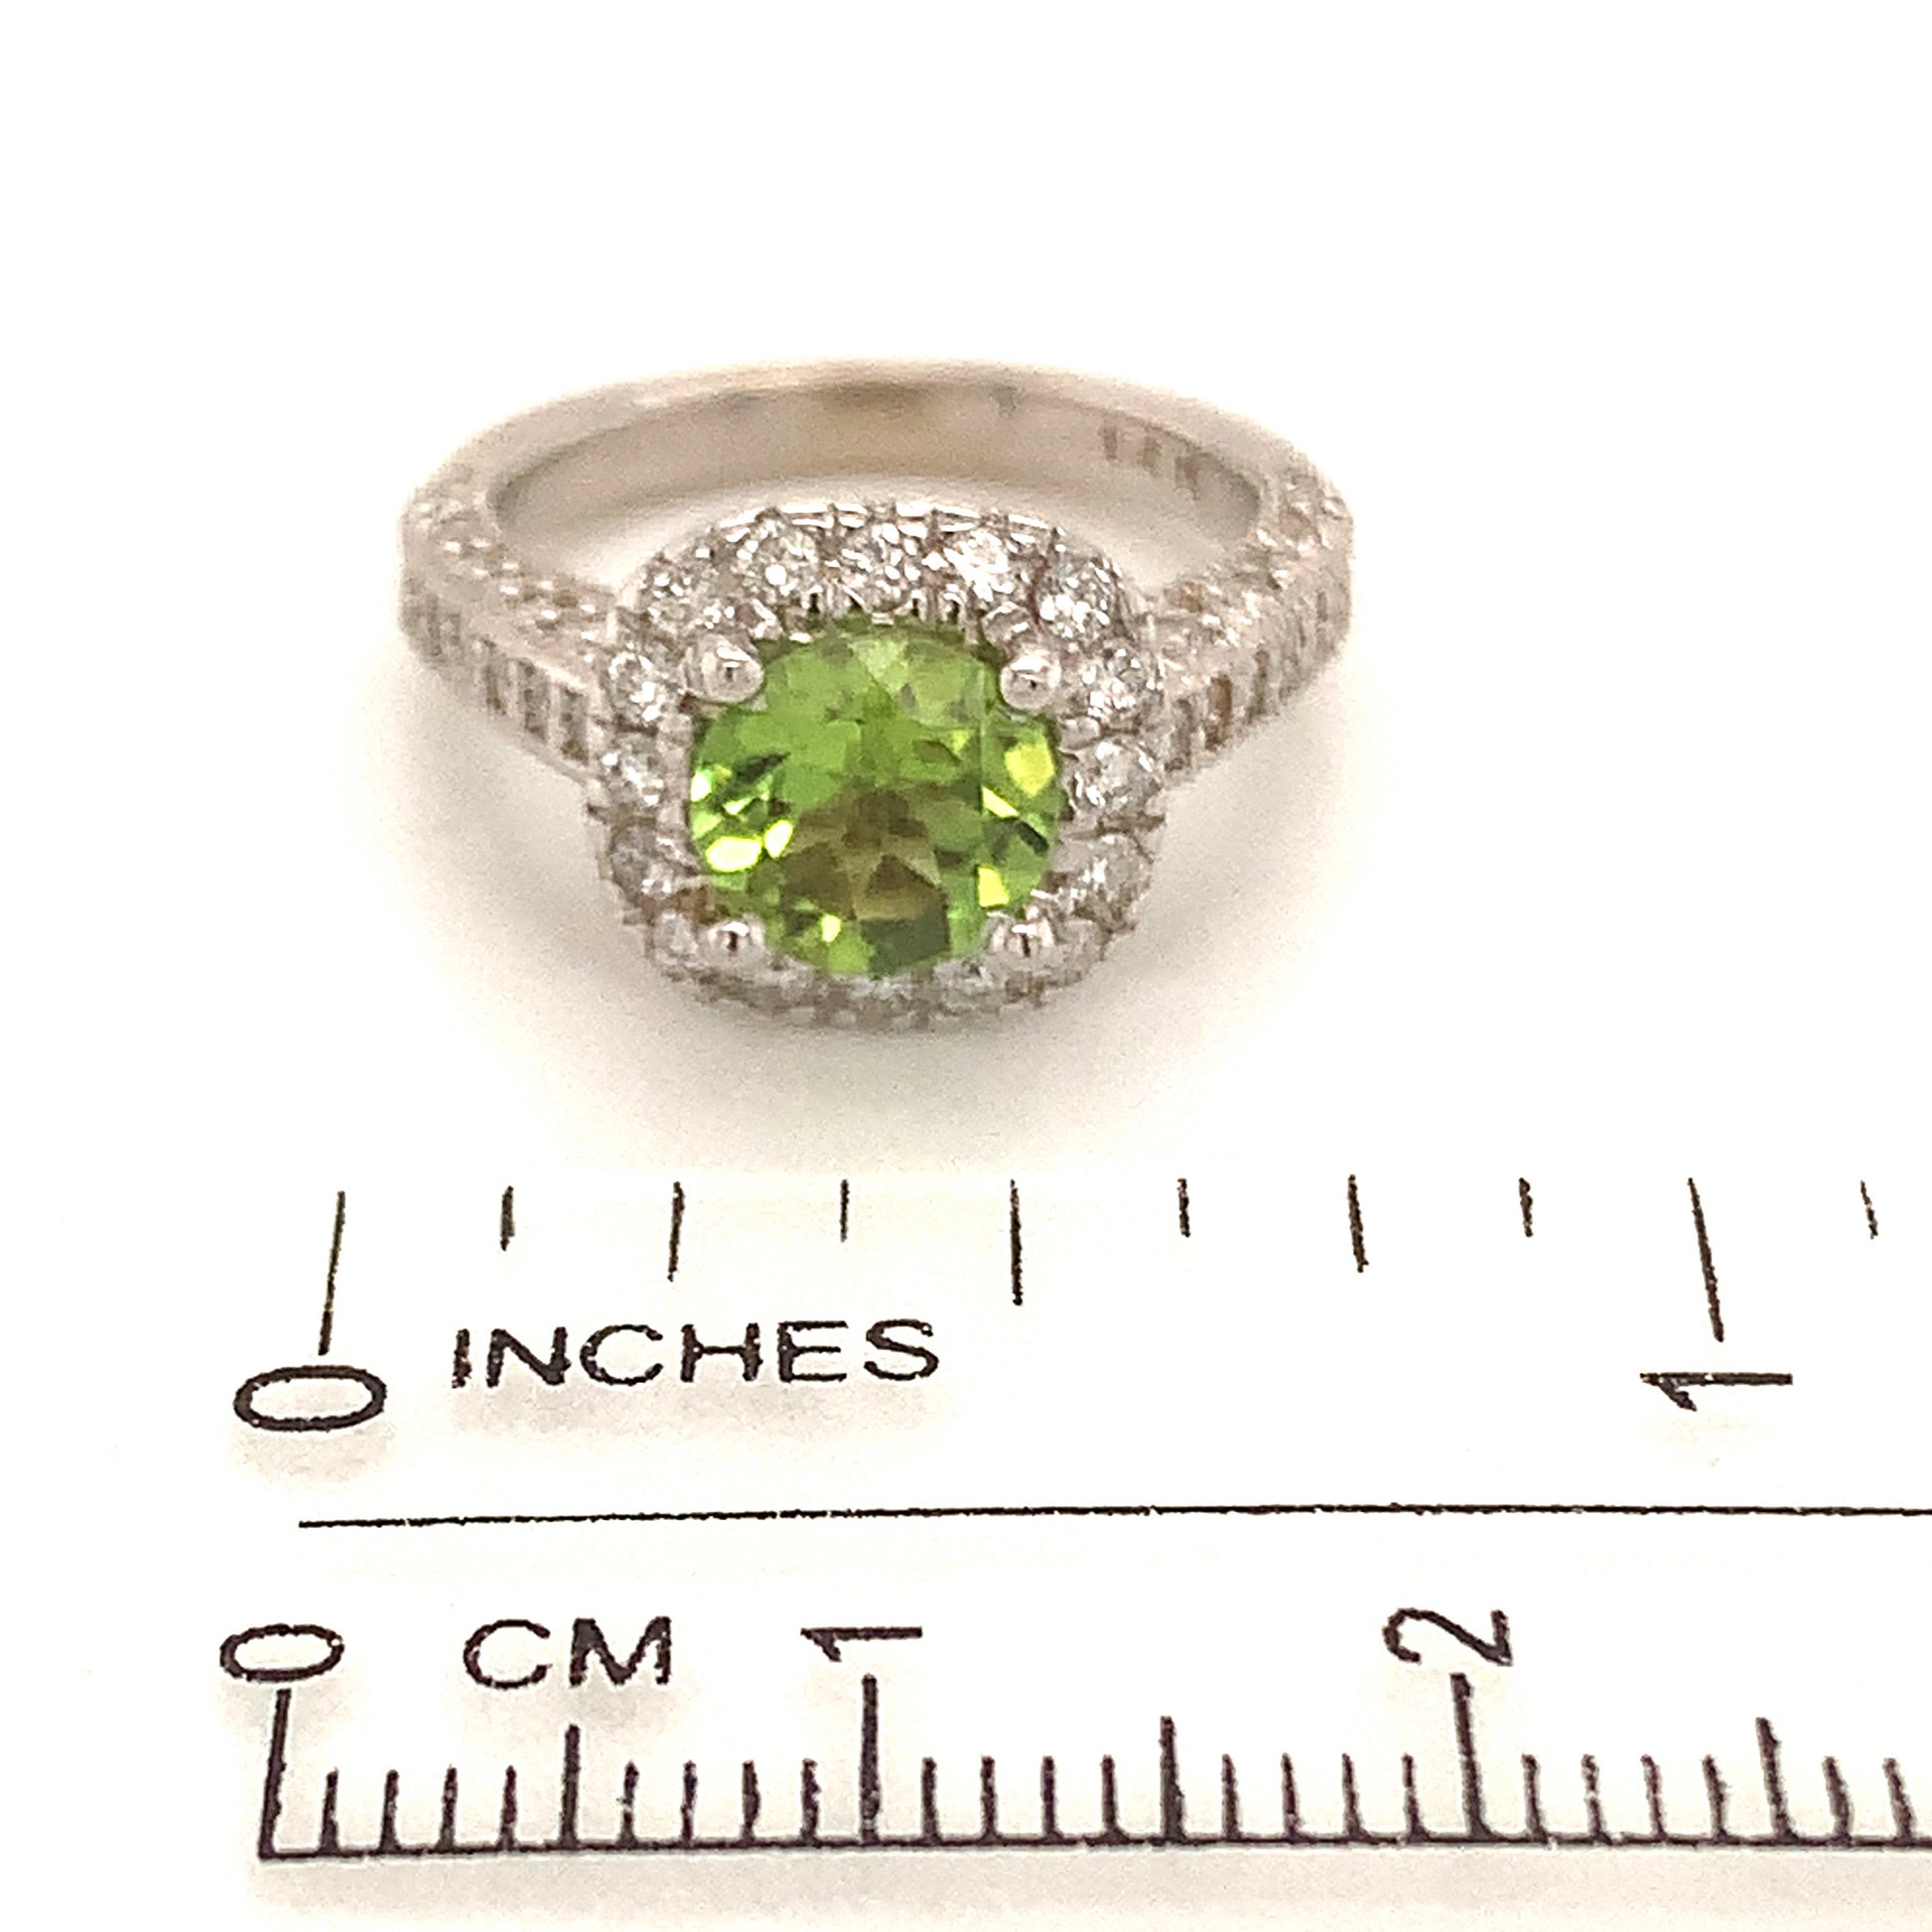 Peridot Diamond Ring 14k Gold Size 5.5 1.85 TCW Certified $4,950 121081 - Certified Estate Jewelry